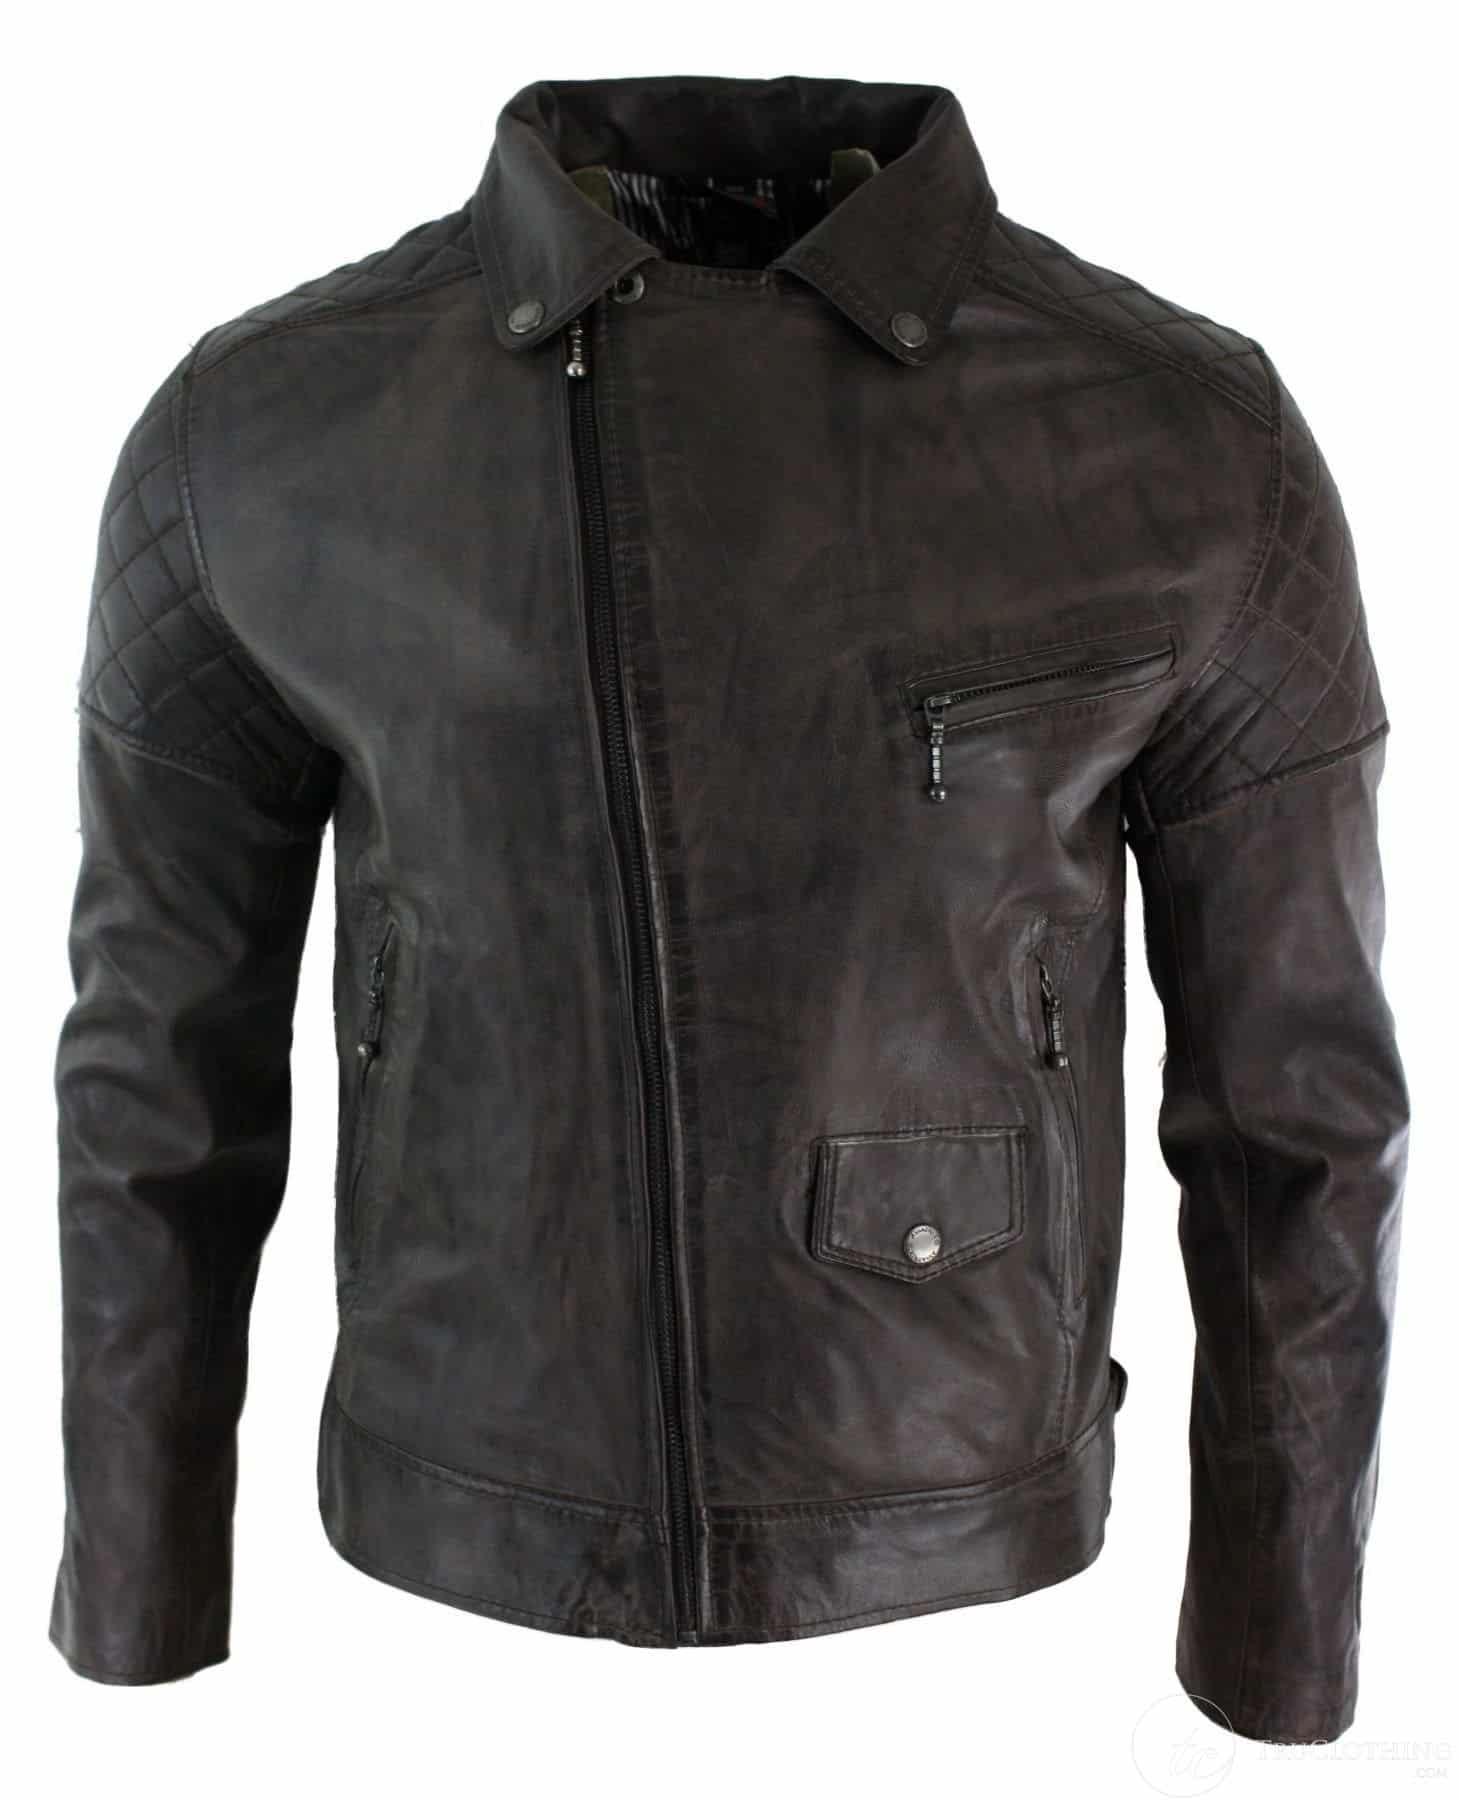 Mens 100% Real Leather Waistcoat Vintage Biker Retro Vest in Washed Brown Black